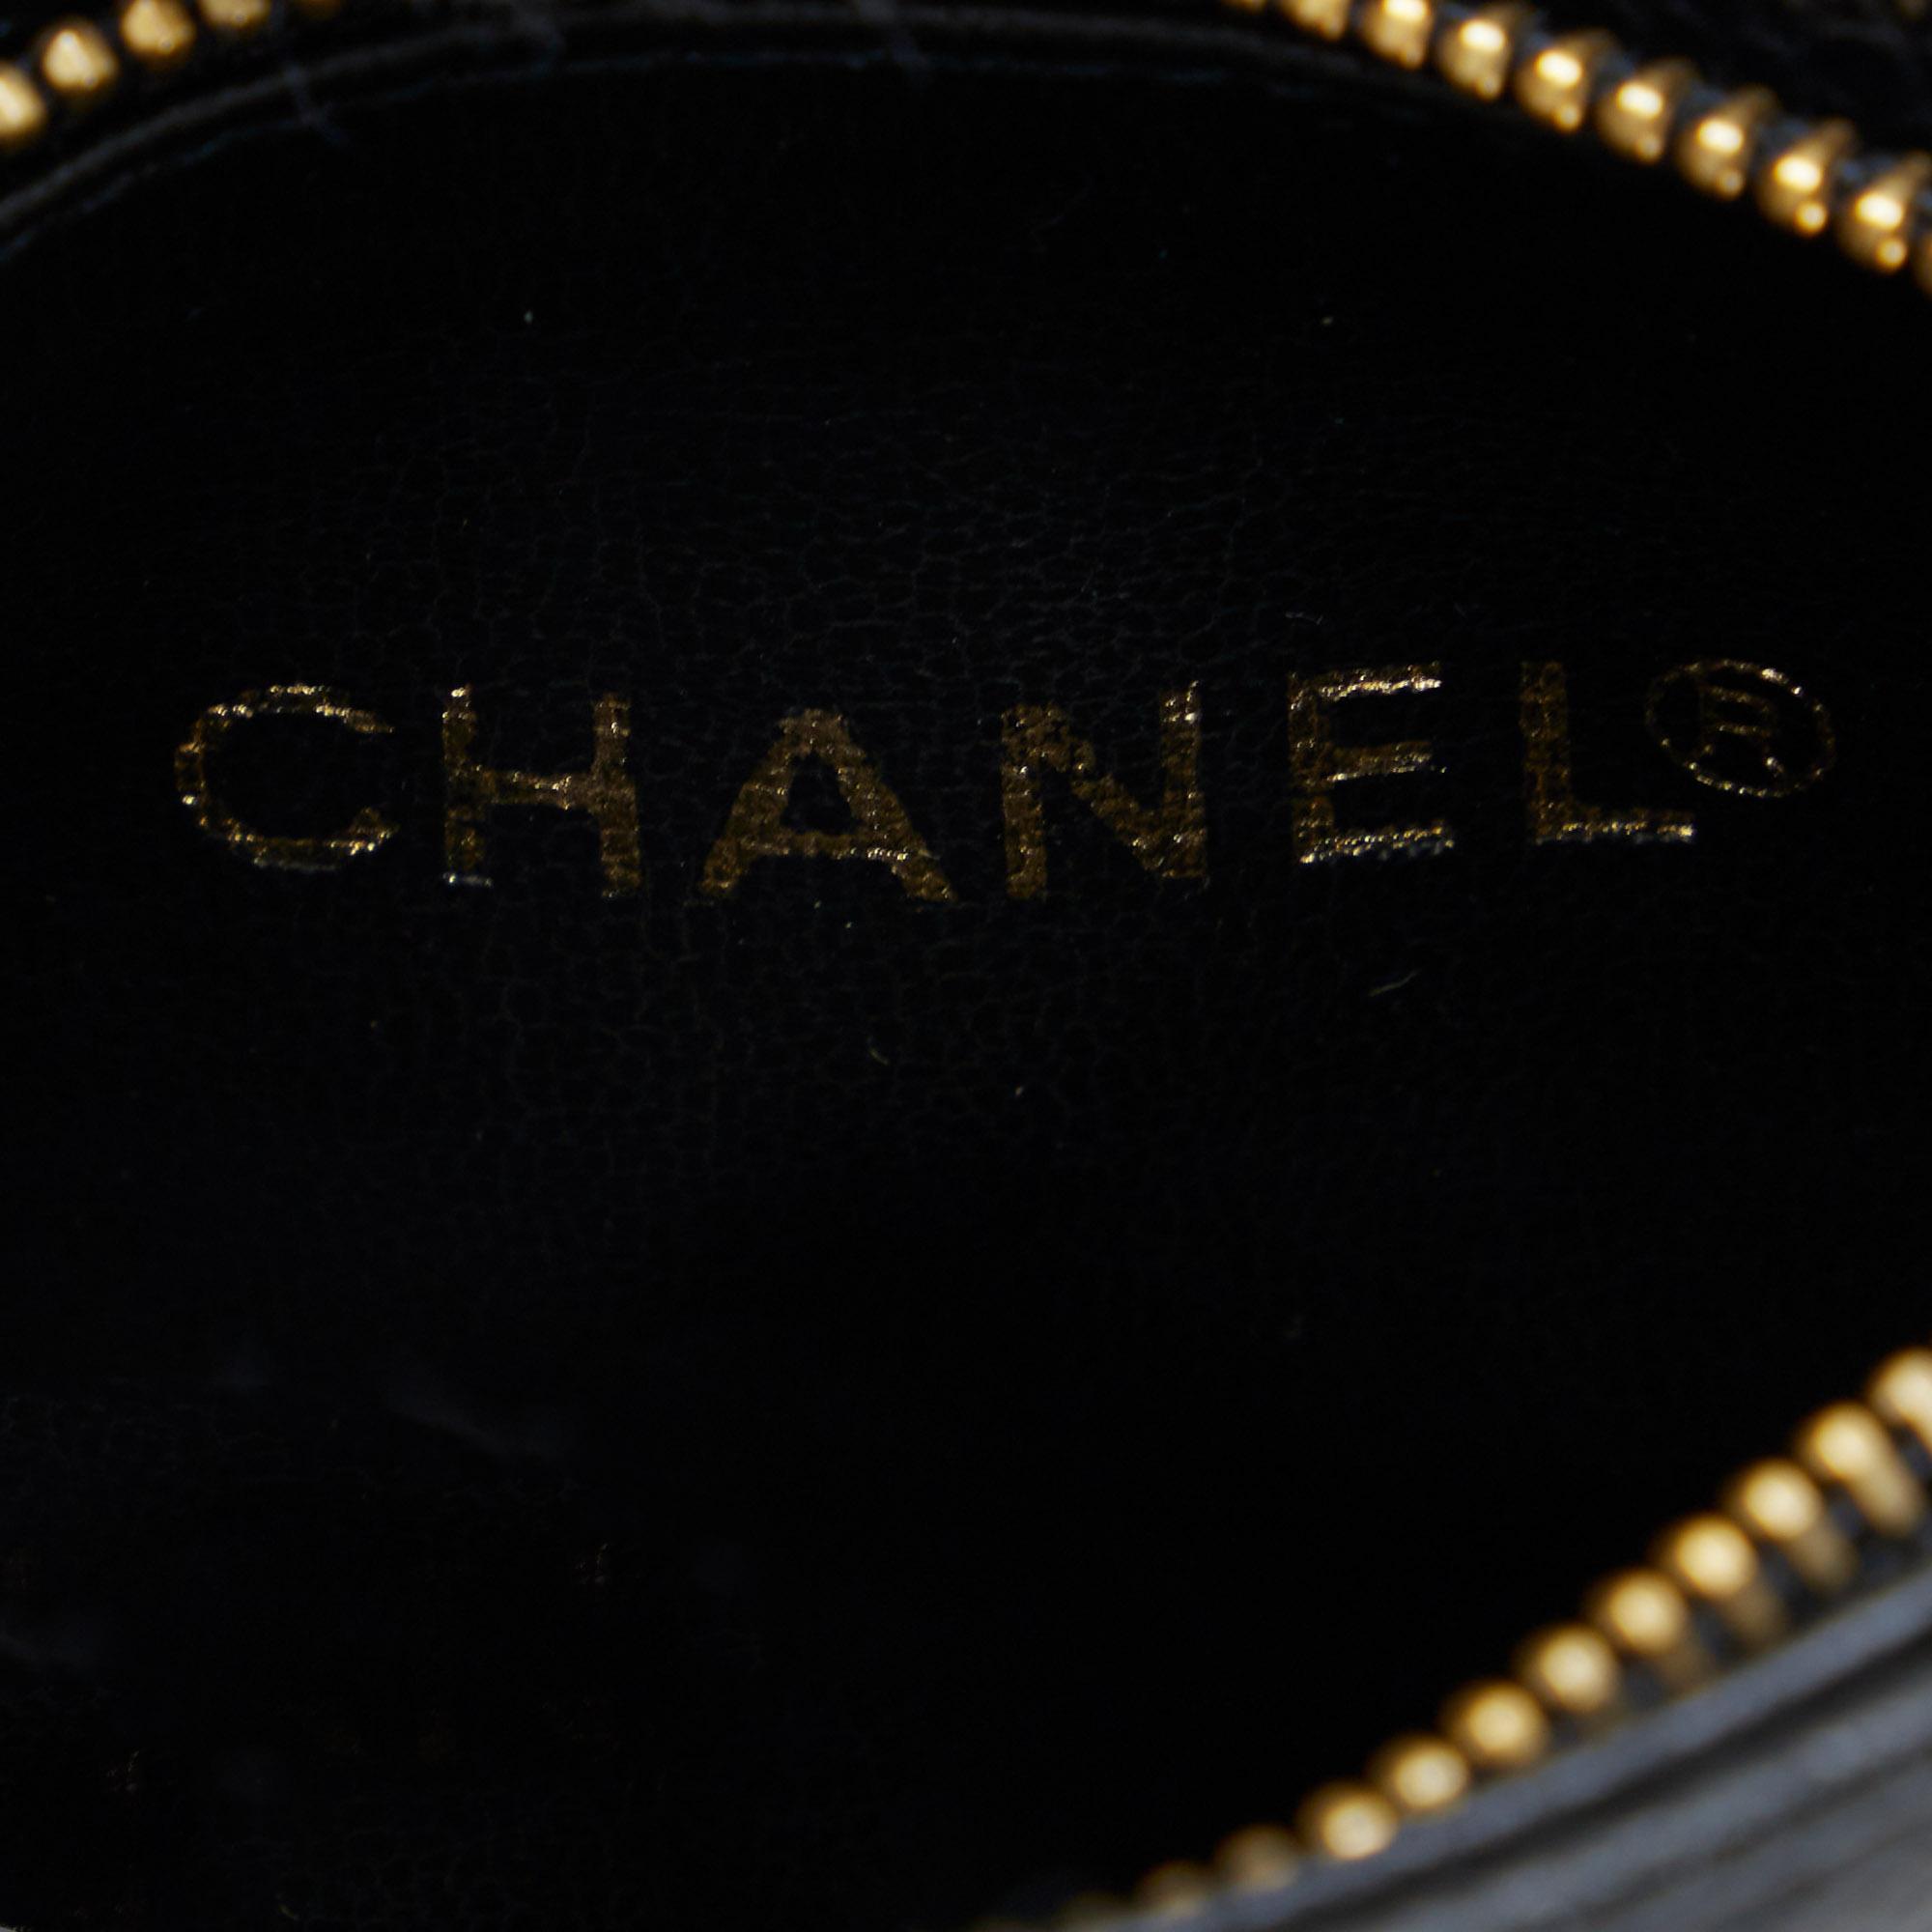 Chanel Black Caviar Belt Bag